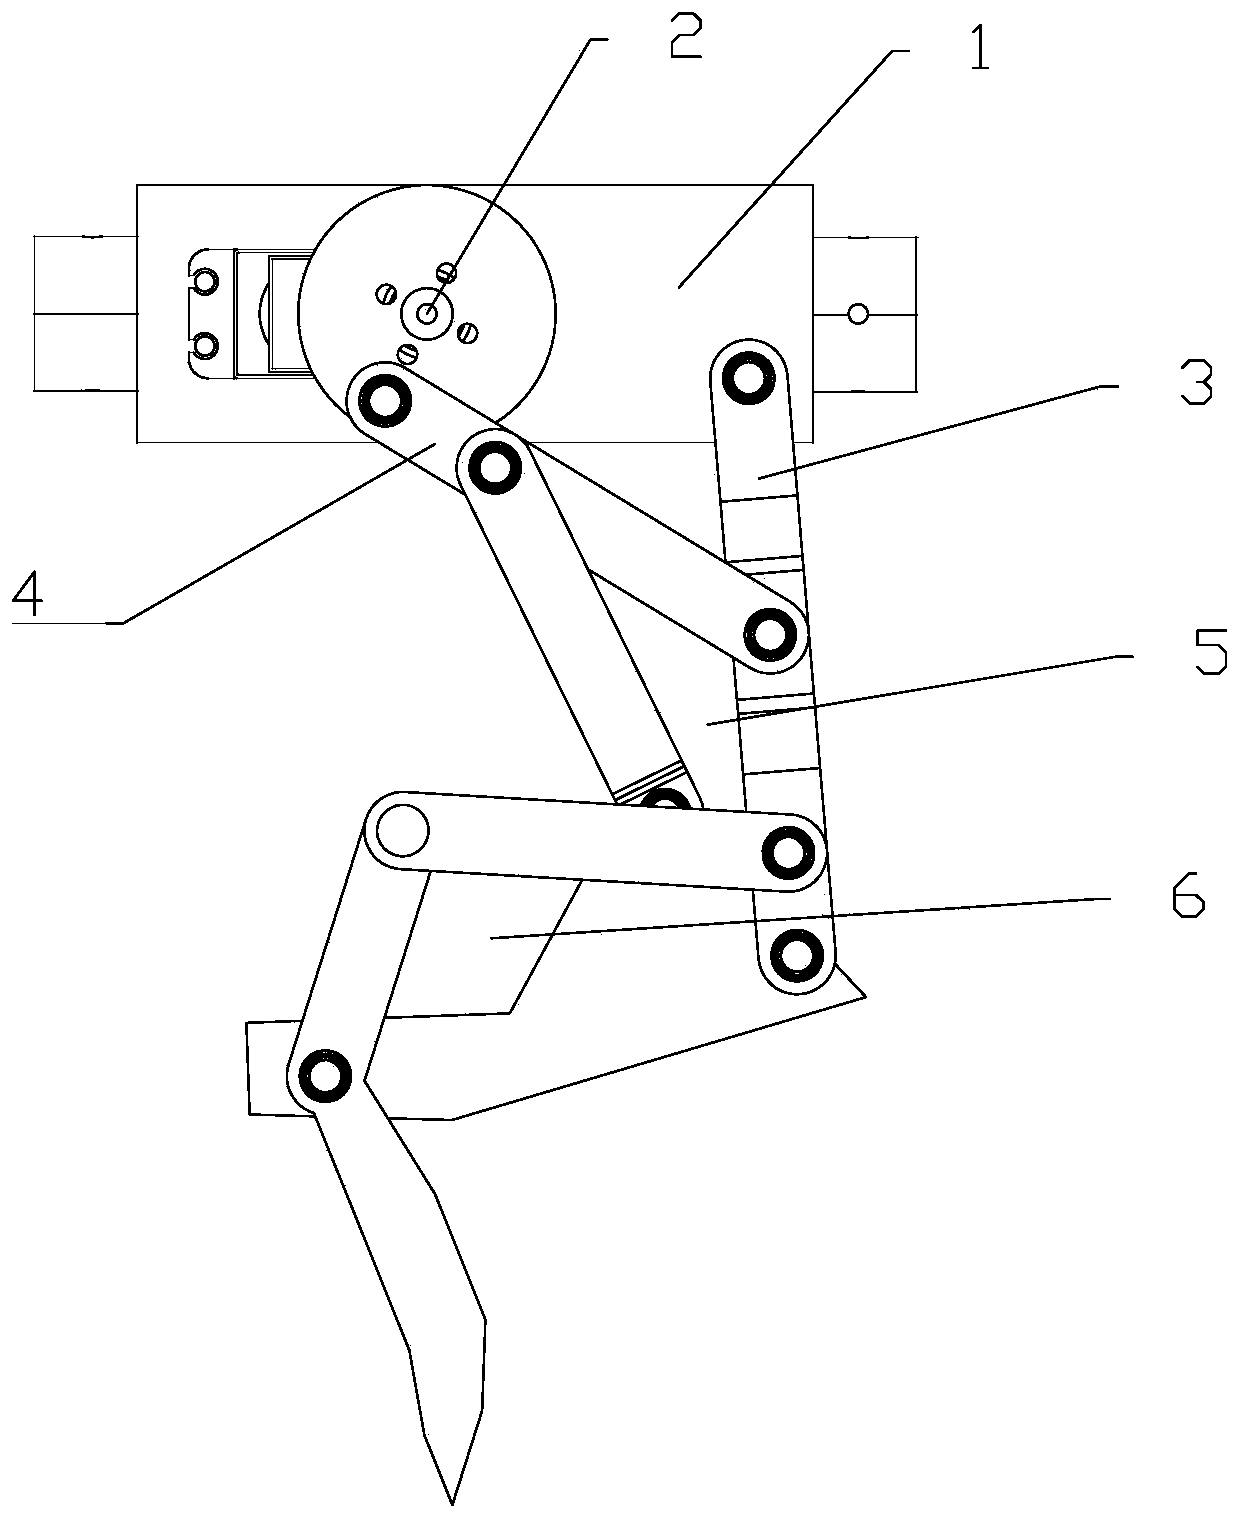 A multi-link bionic mechanical leg and crawling robot